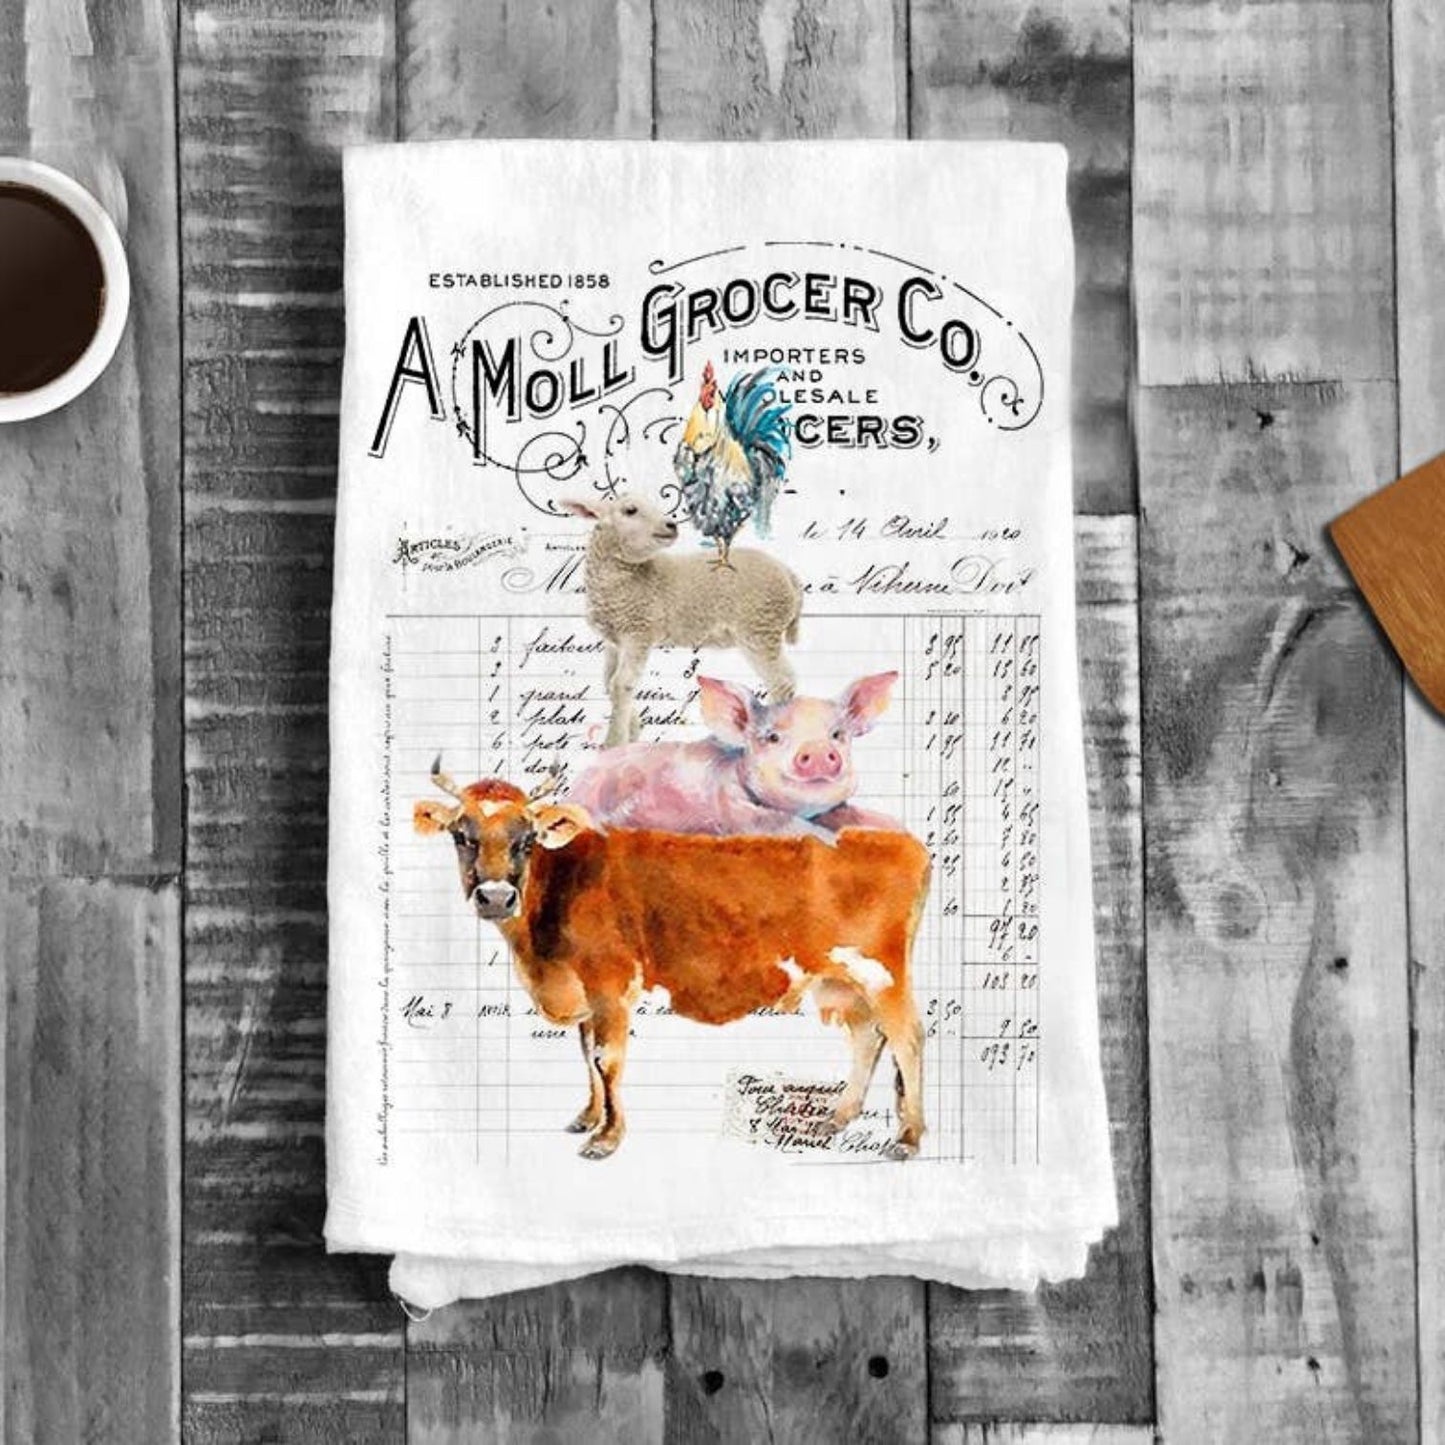 Vintage Farm Animals Grocers Flour Sack Tea Towel Kitchen